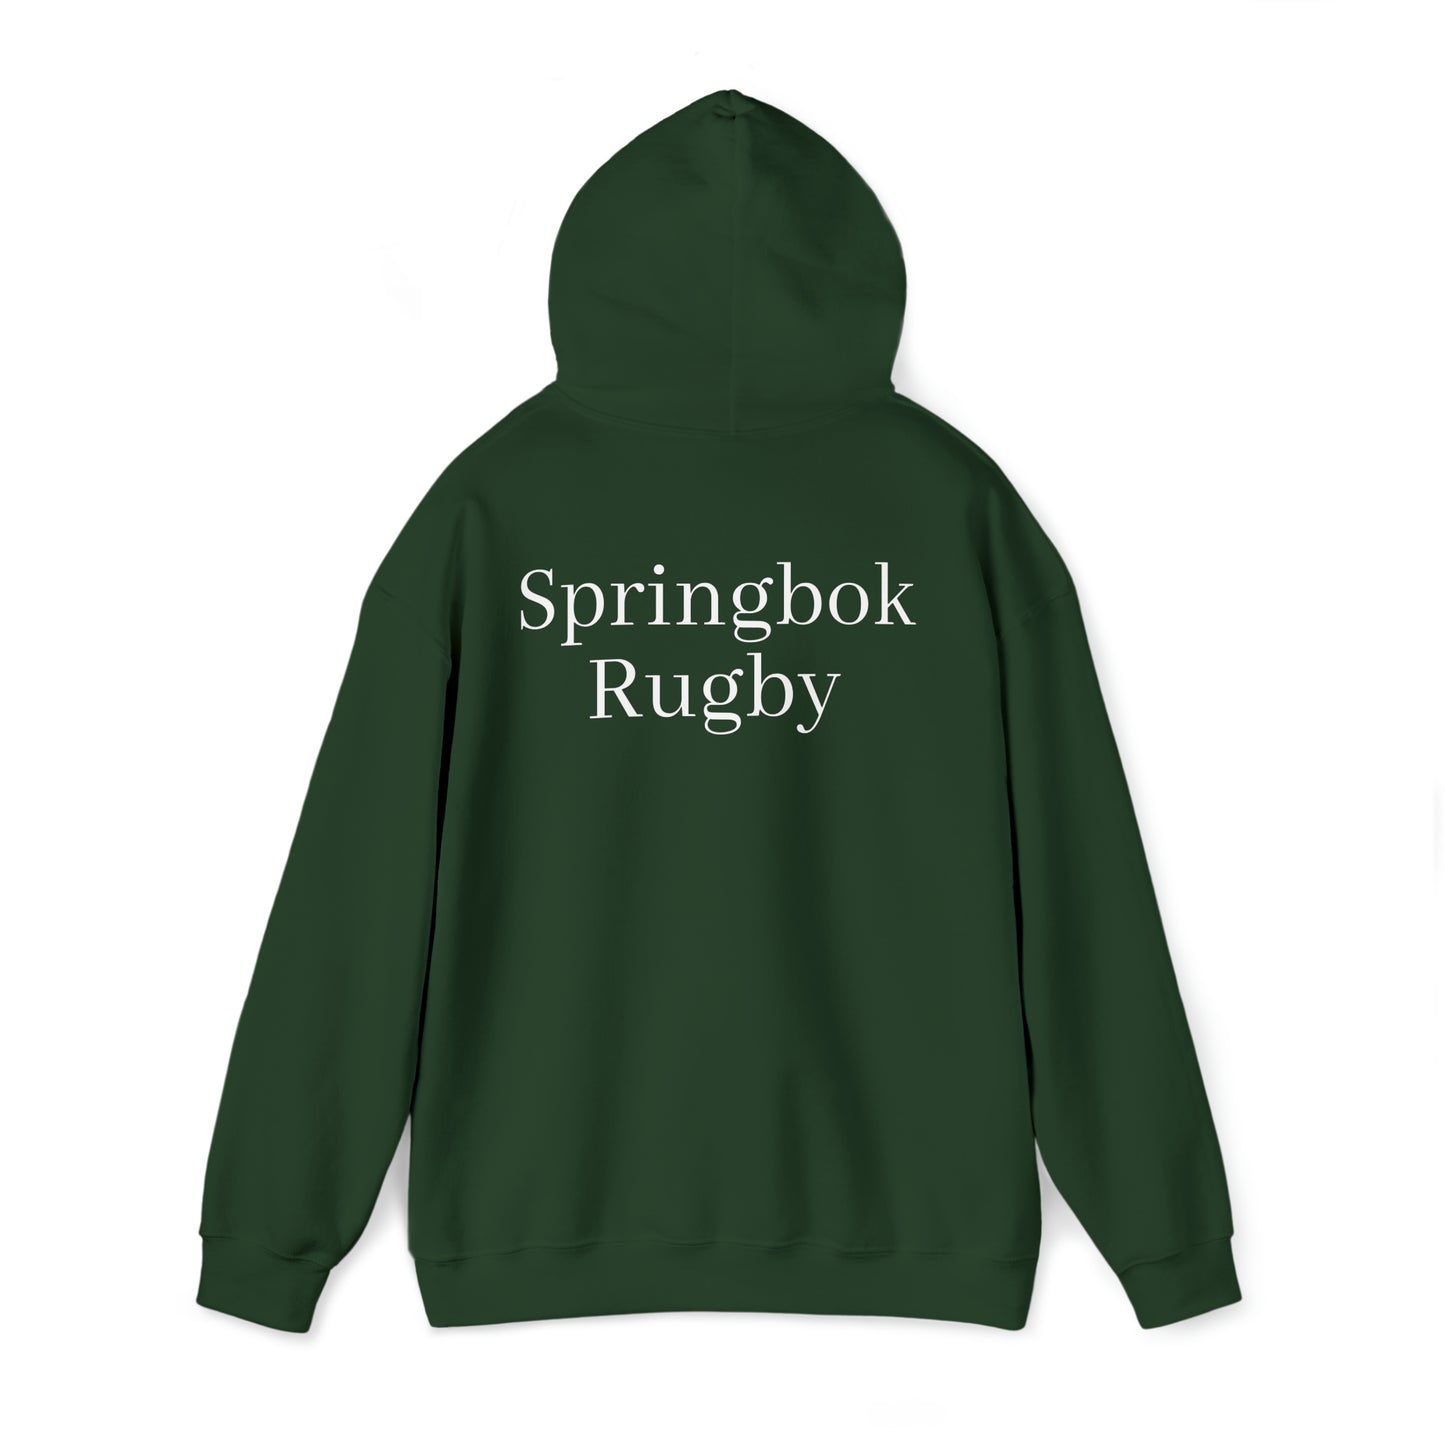 Springboks lifting RWC - dark hoodies